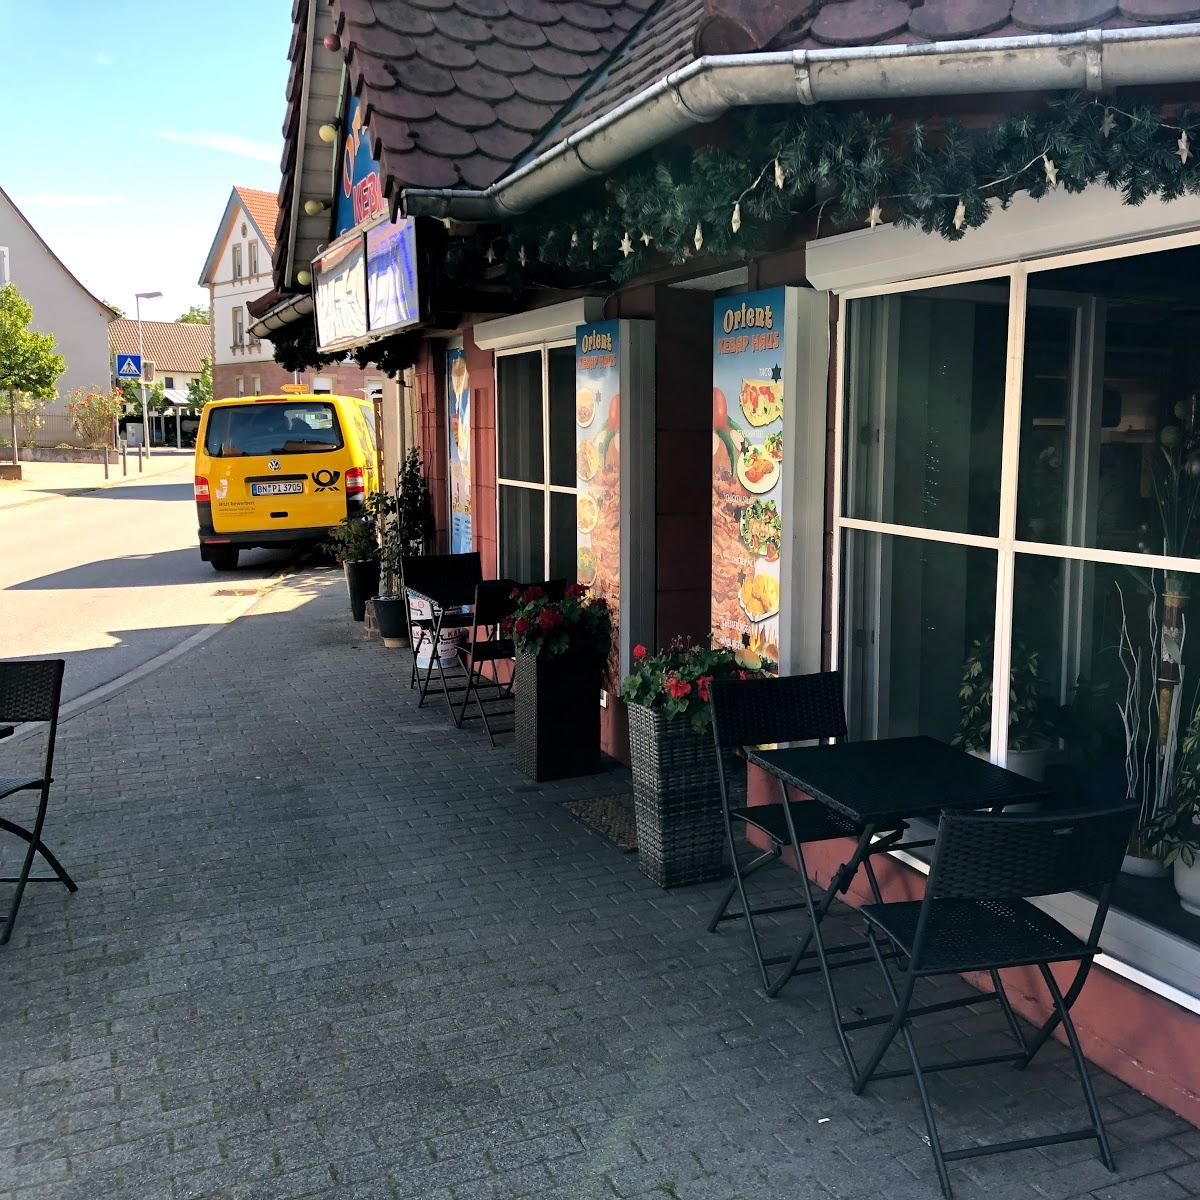 Restaurant "Orient Kebap" in  Aglasterhausen